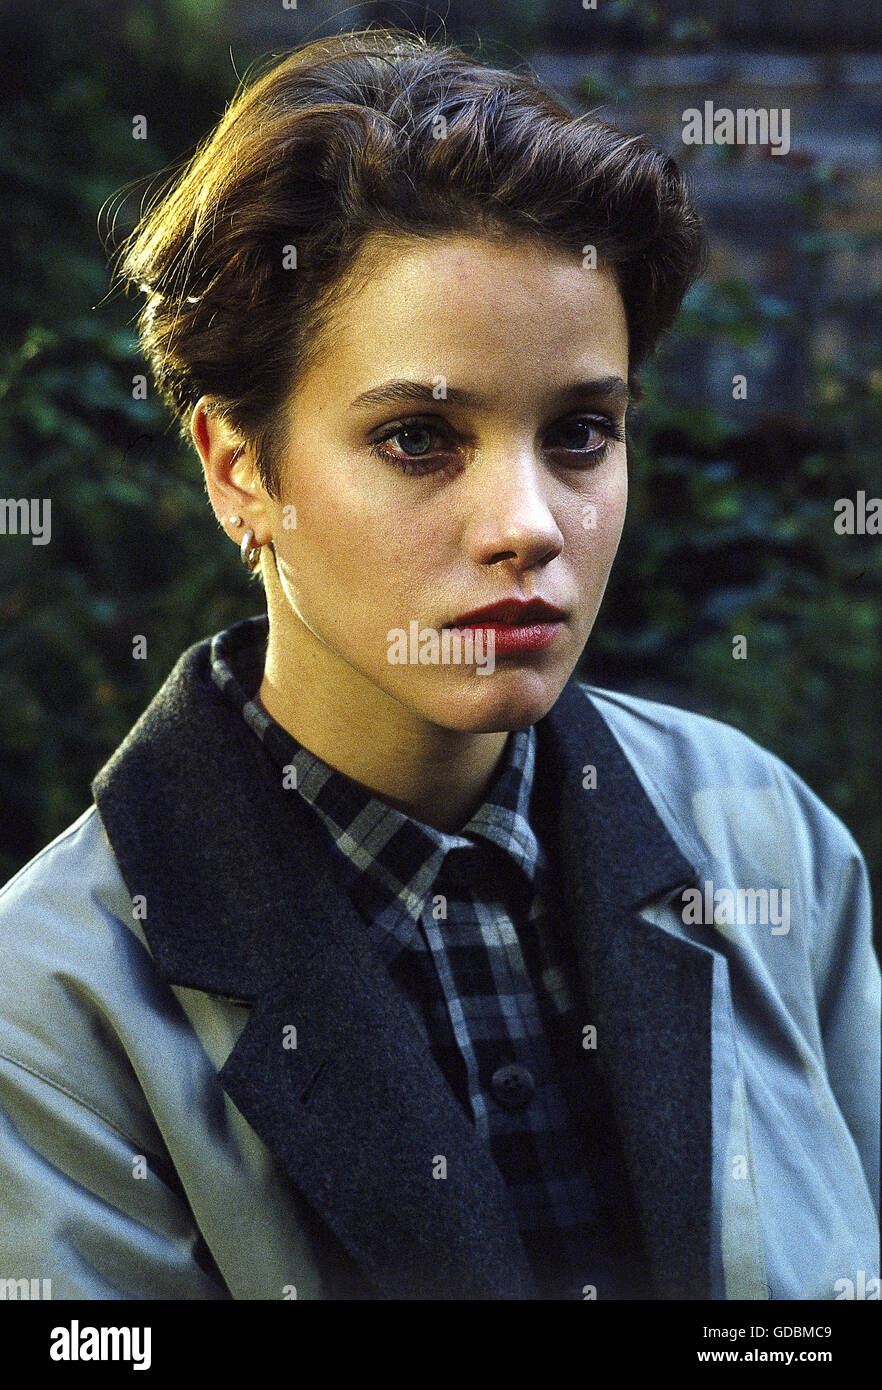 Baumeister, Muriel, * 24.1.1972, German actress, portrait, circa 1995, Stock Photo